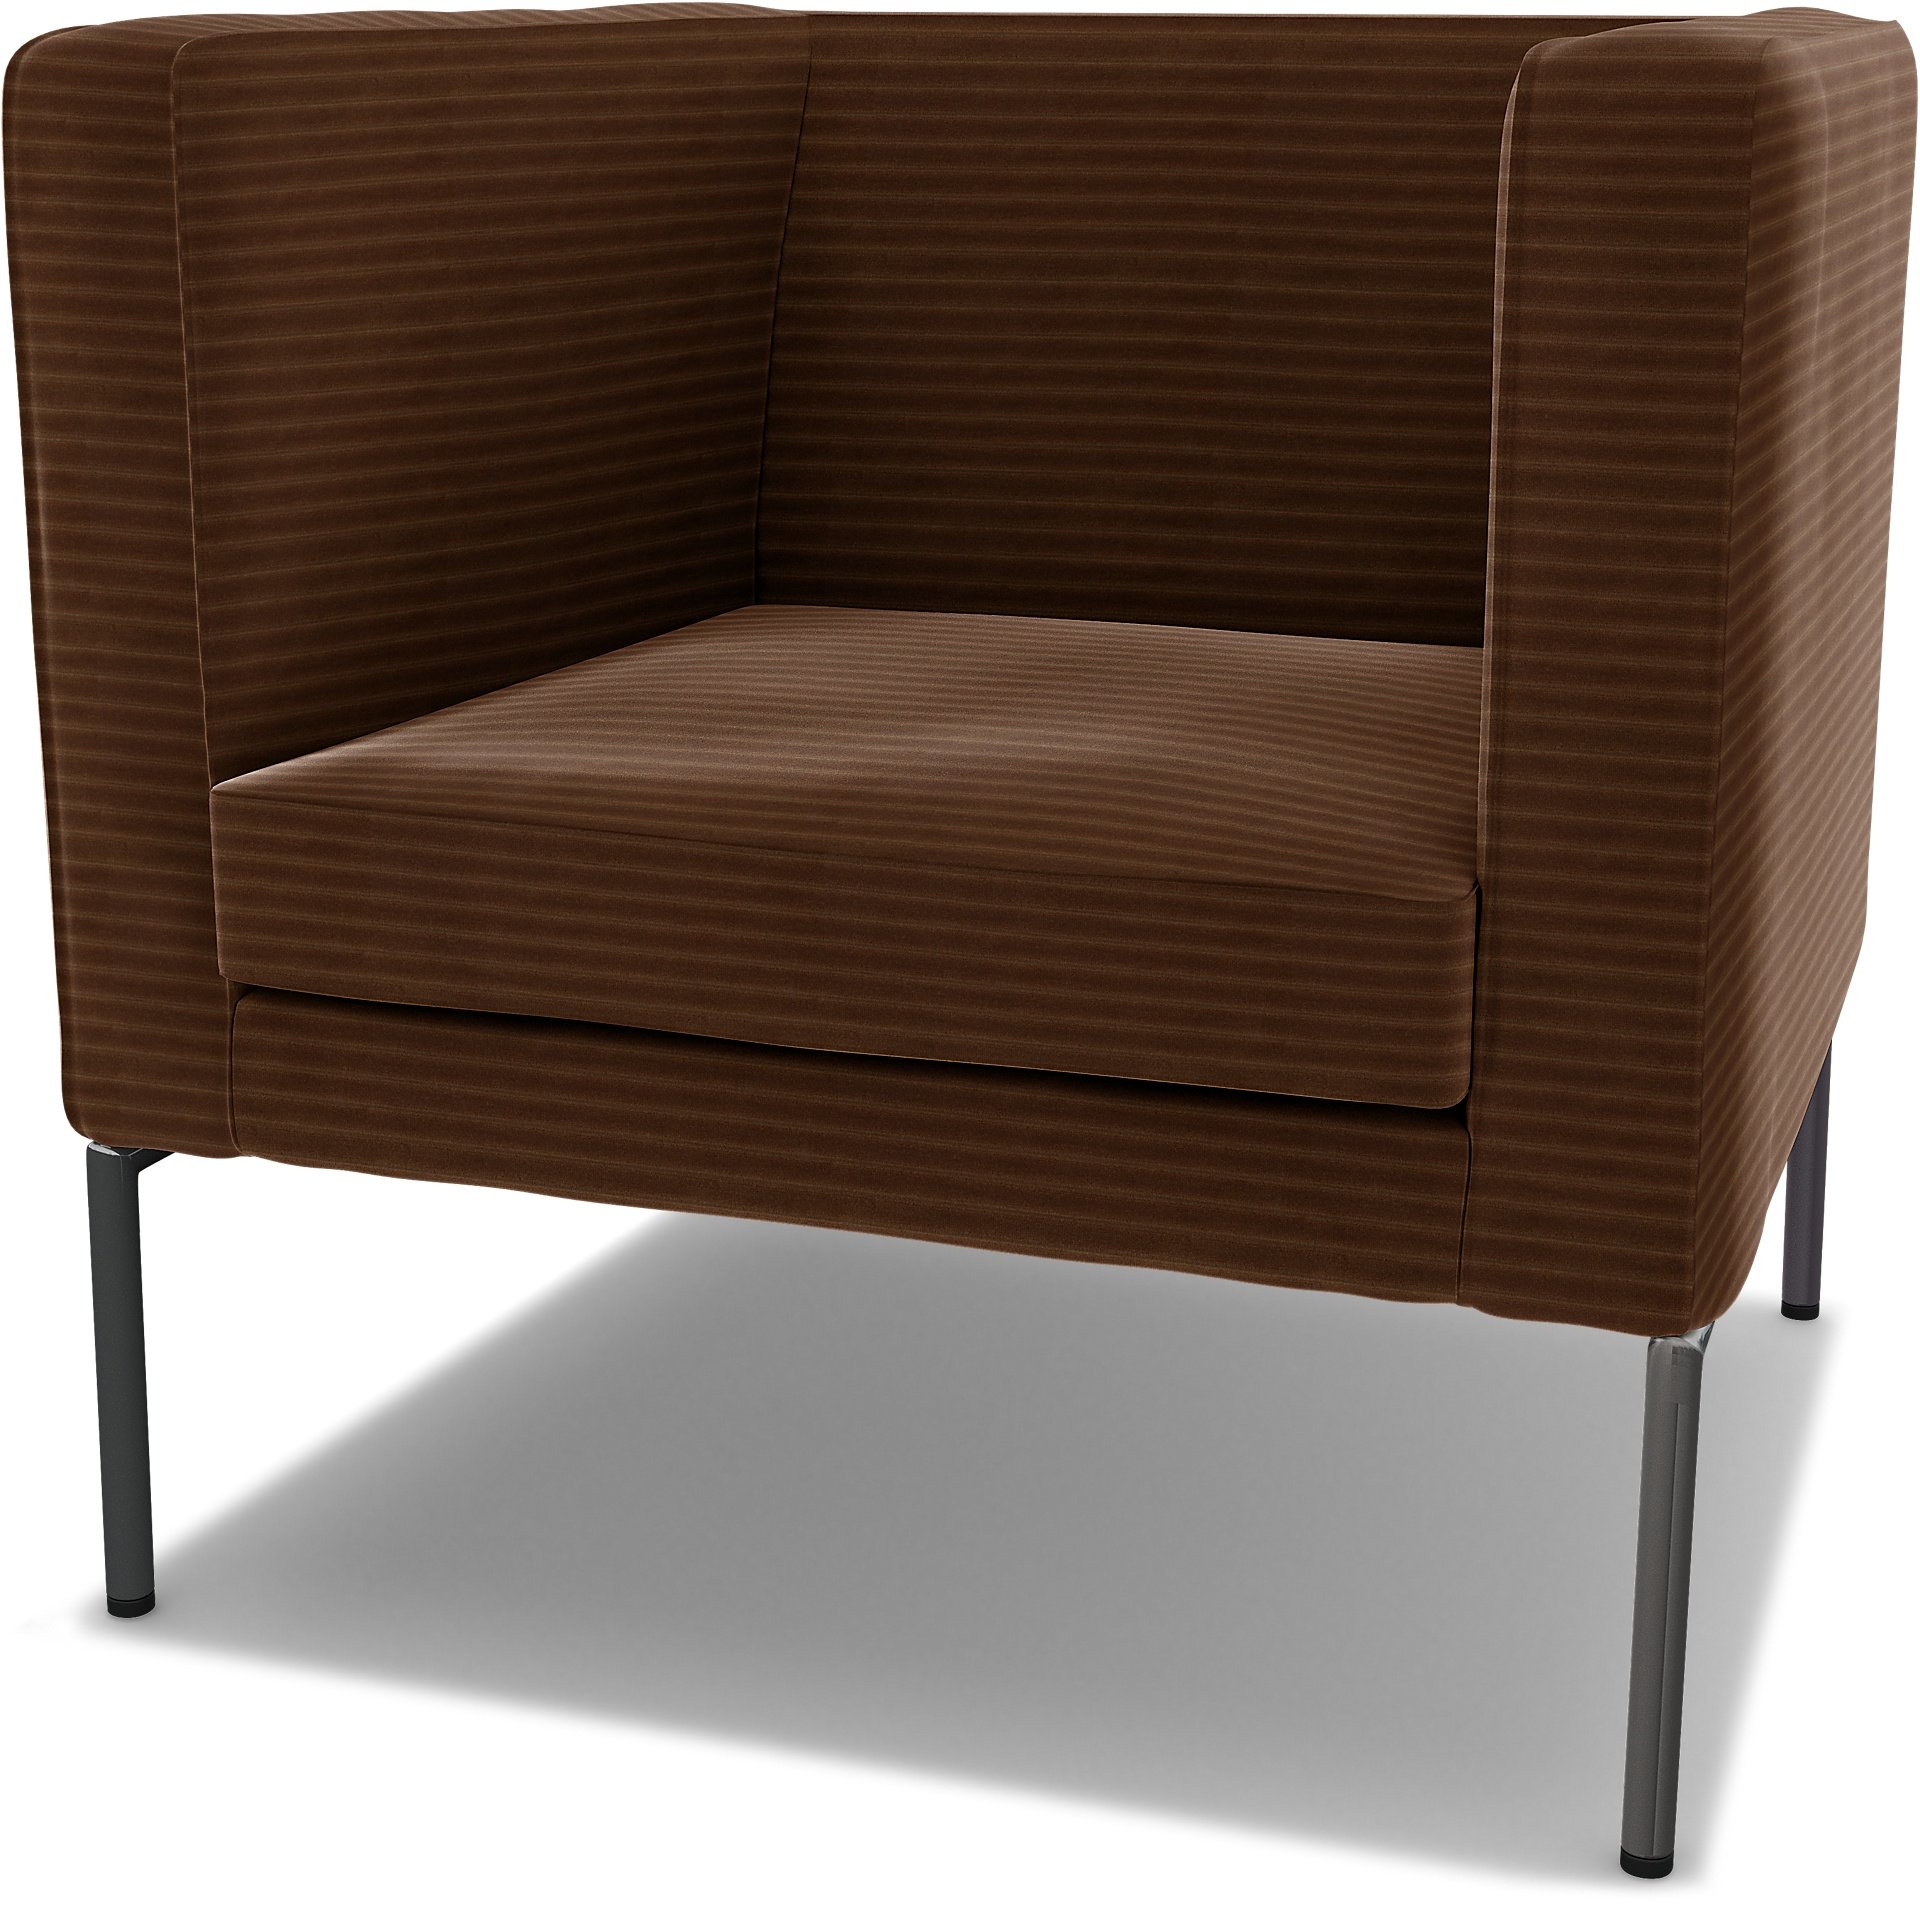 IKEA - Klappsta Armchair Cover, Chocolate Brown, Corduroy - Bemz